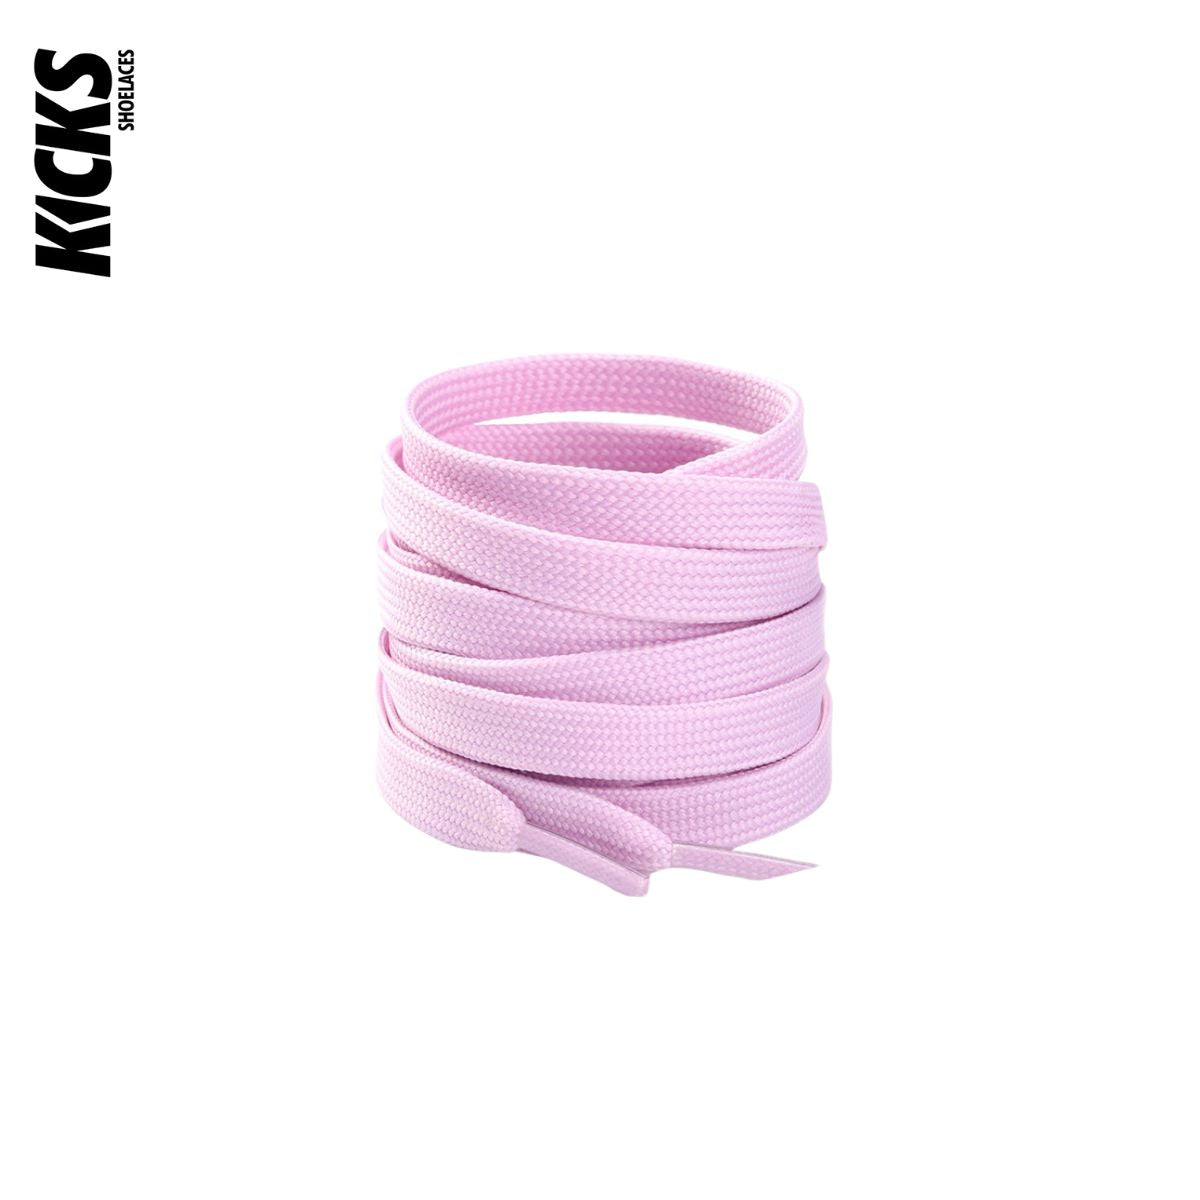 Pastel Purple Nike Dunks Shoelace Replacements - Kicks Shoelaces